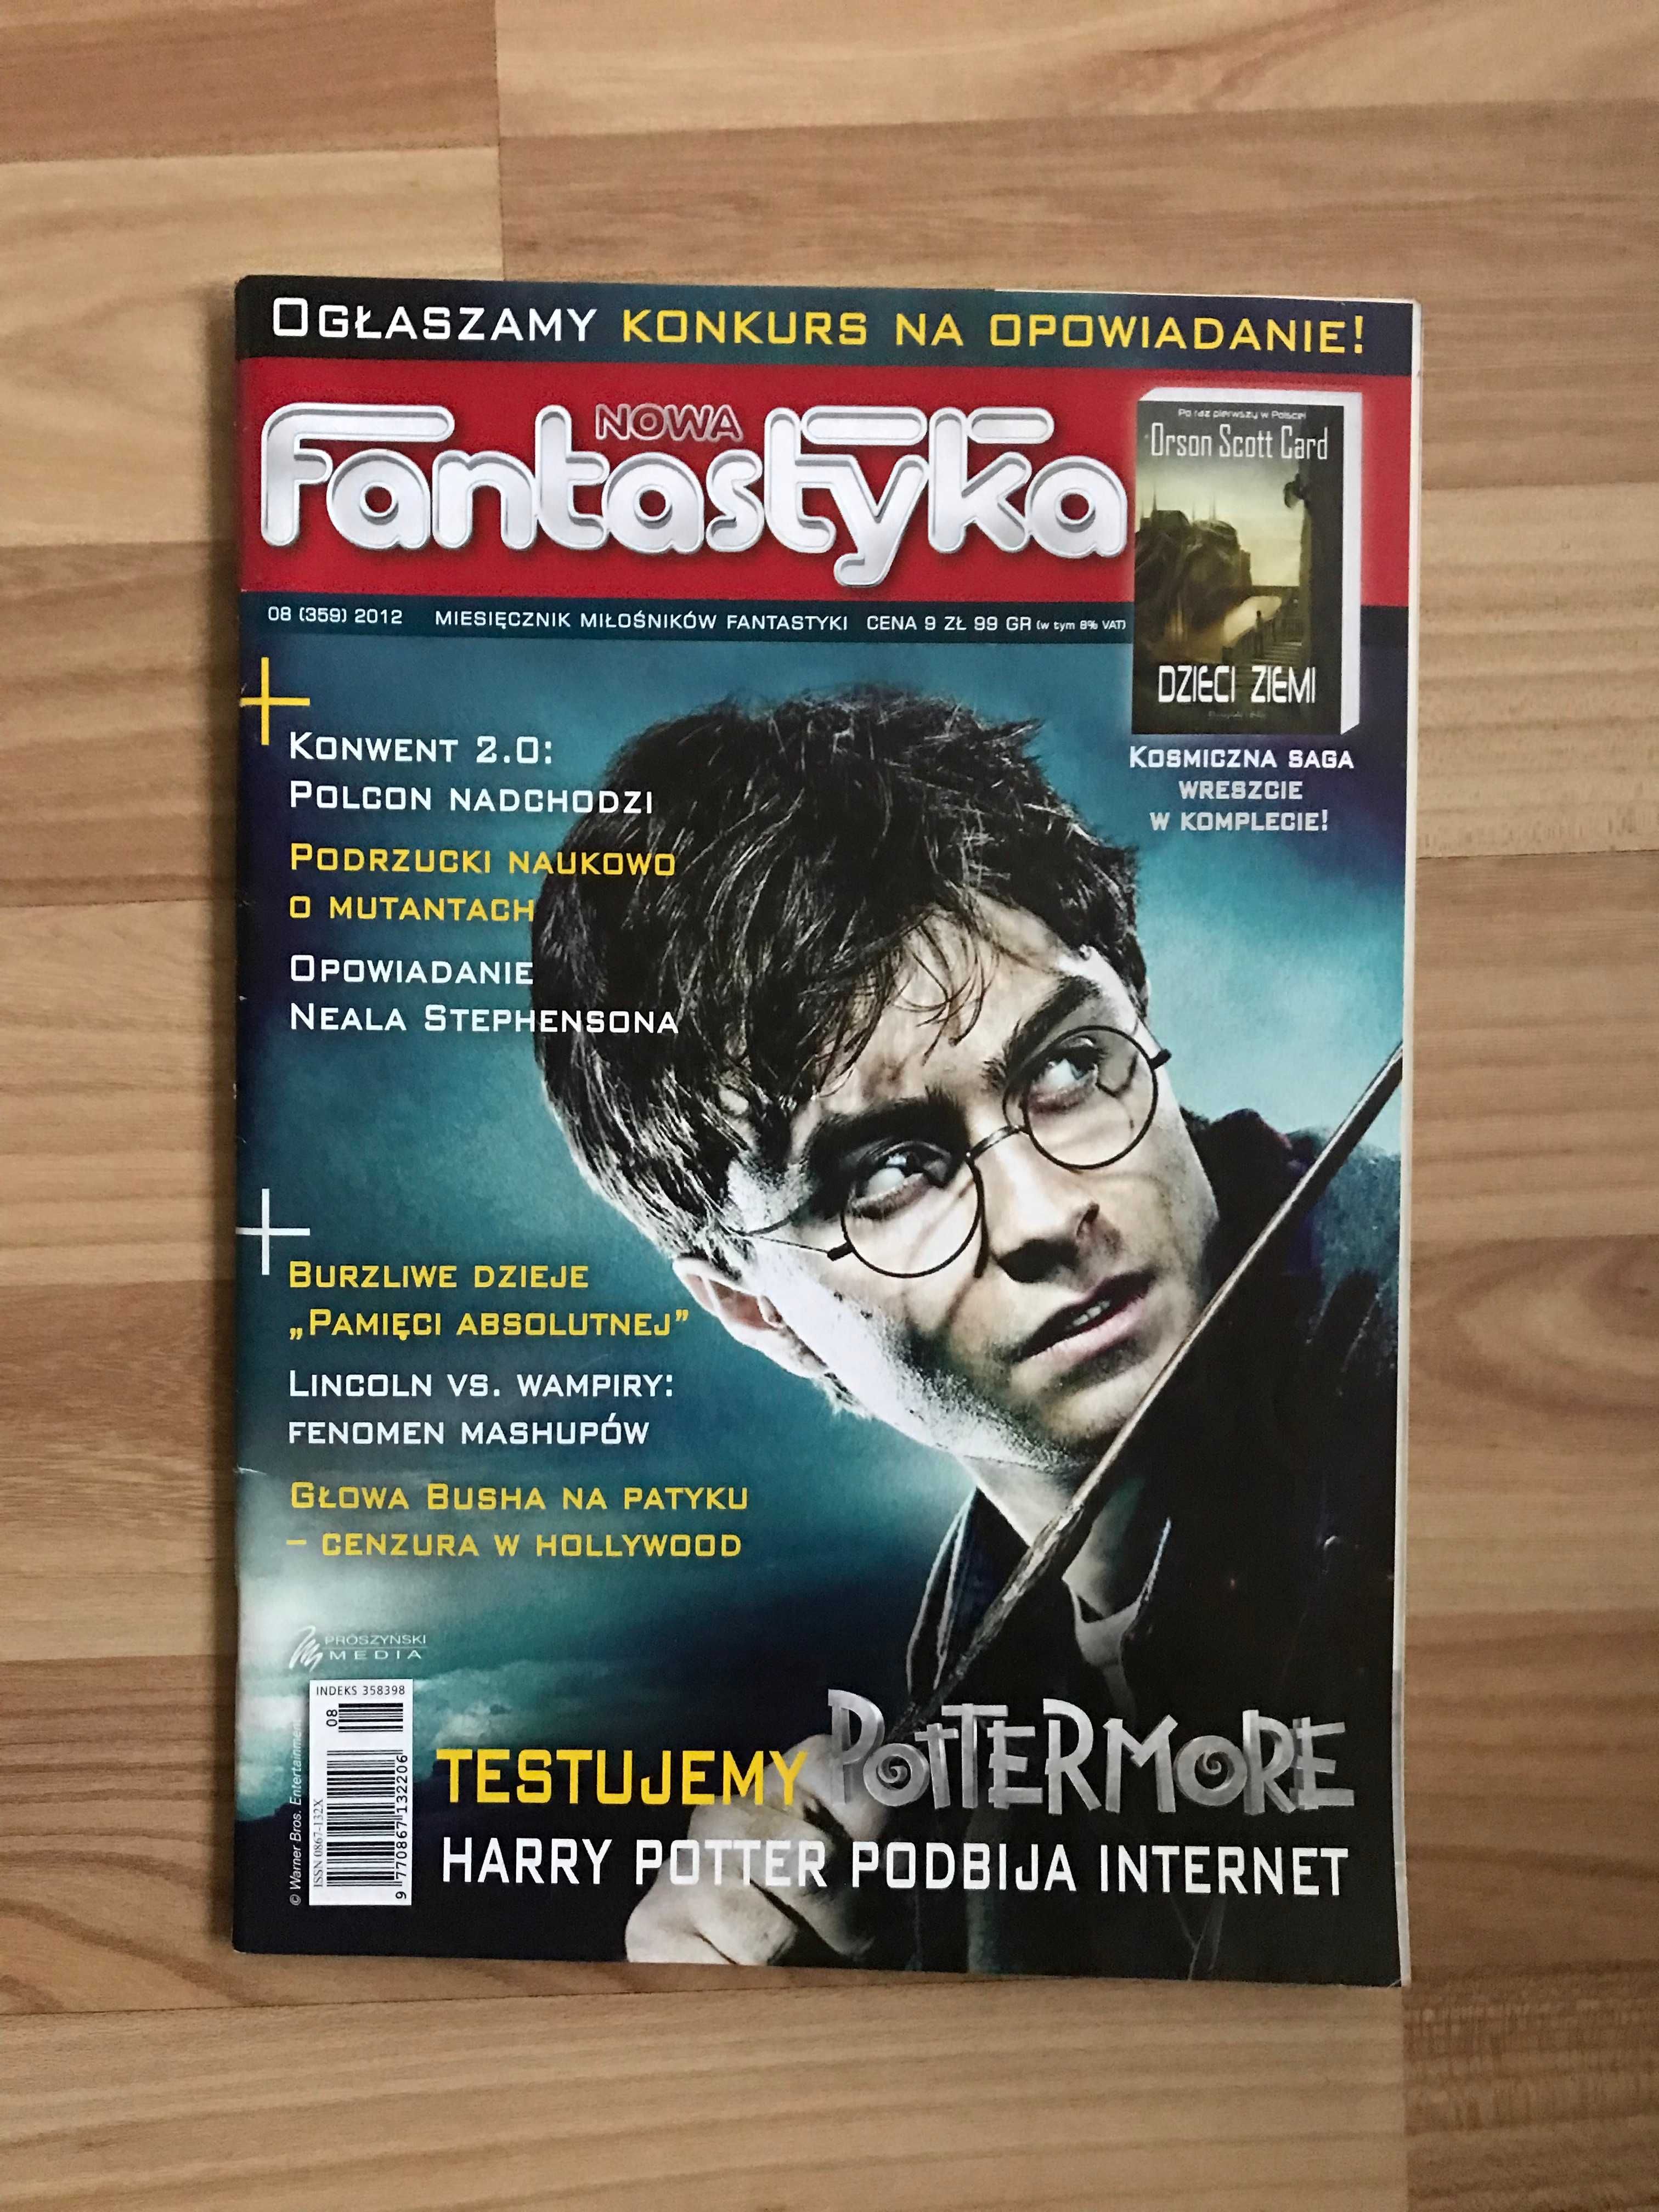 Nowa Fantastyka 8 (359) 2012 Harry Potter Spiderman Wolwerine